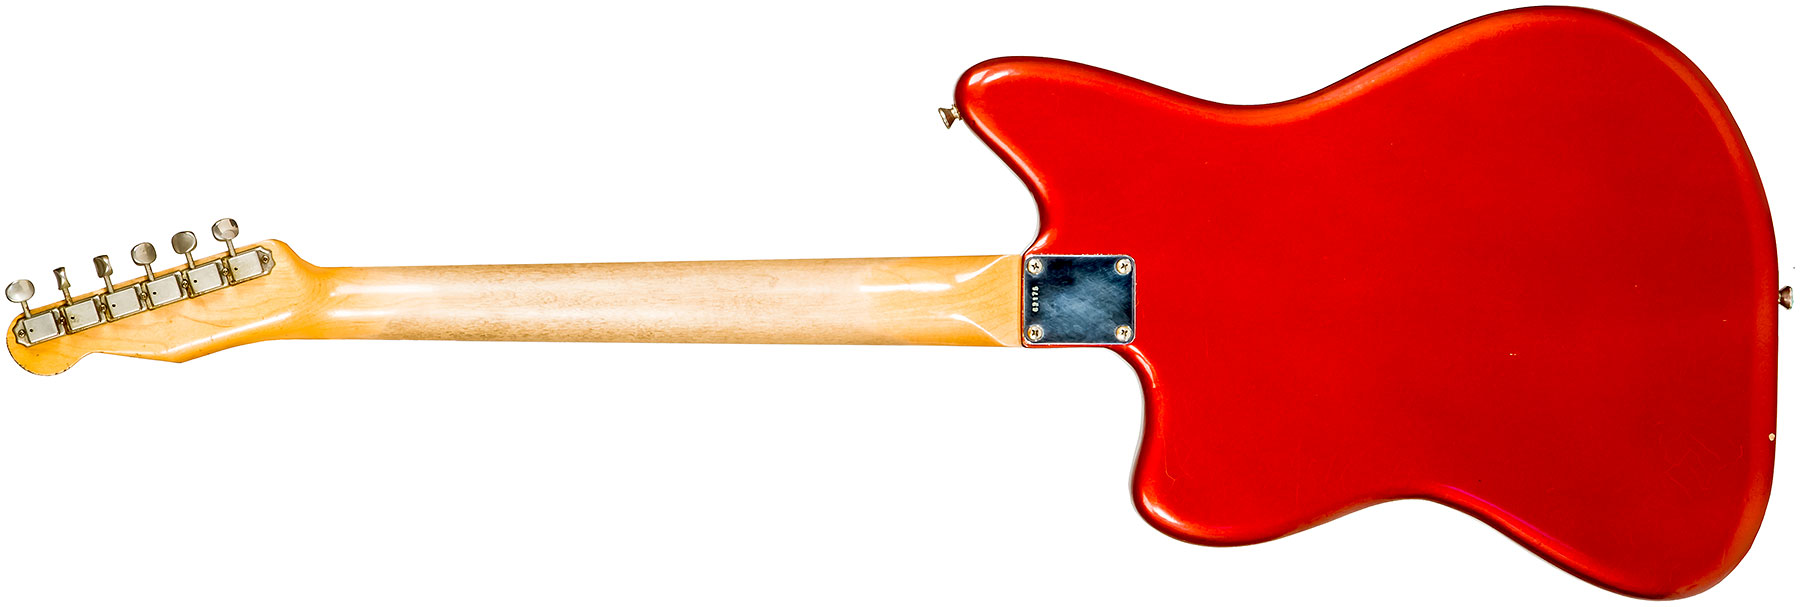 Rebelrelic Wrangler 2h Trem Rw #62175 - Light Aged Candy Apple Red - Guitare Électrique 1/2 Caisse - Variation 1